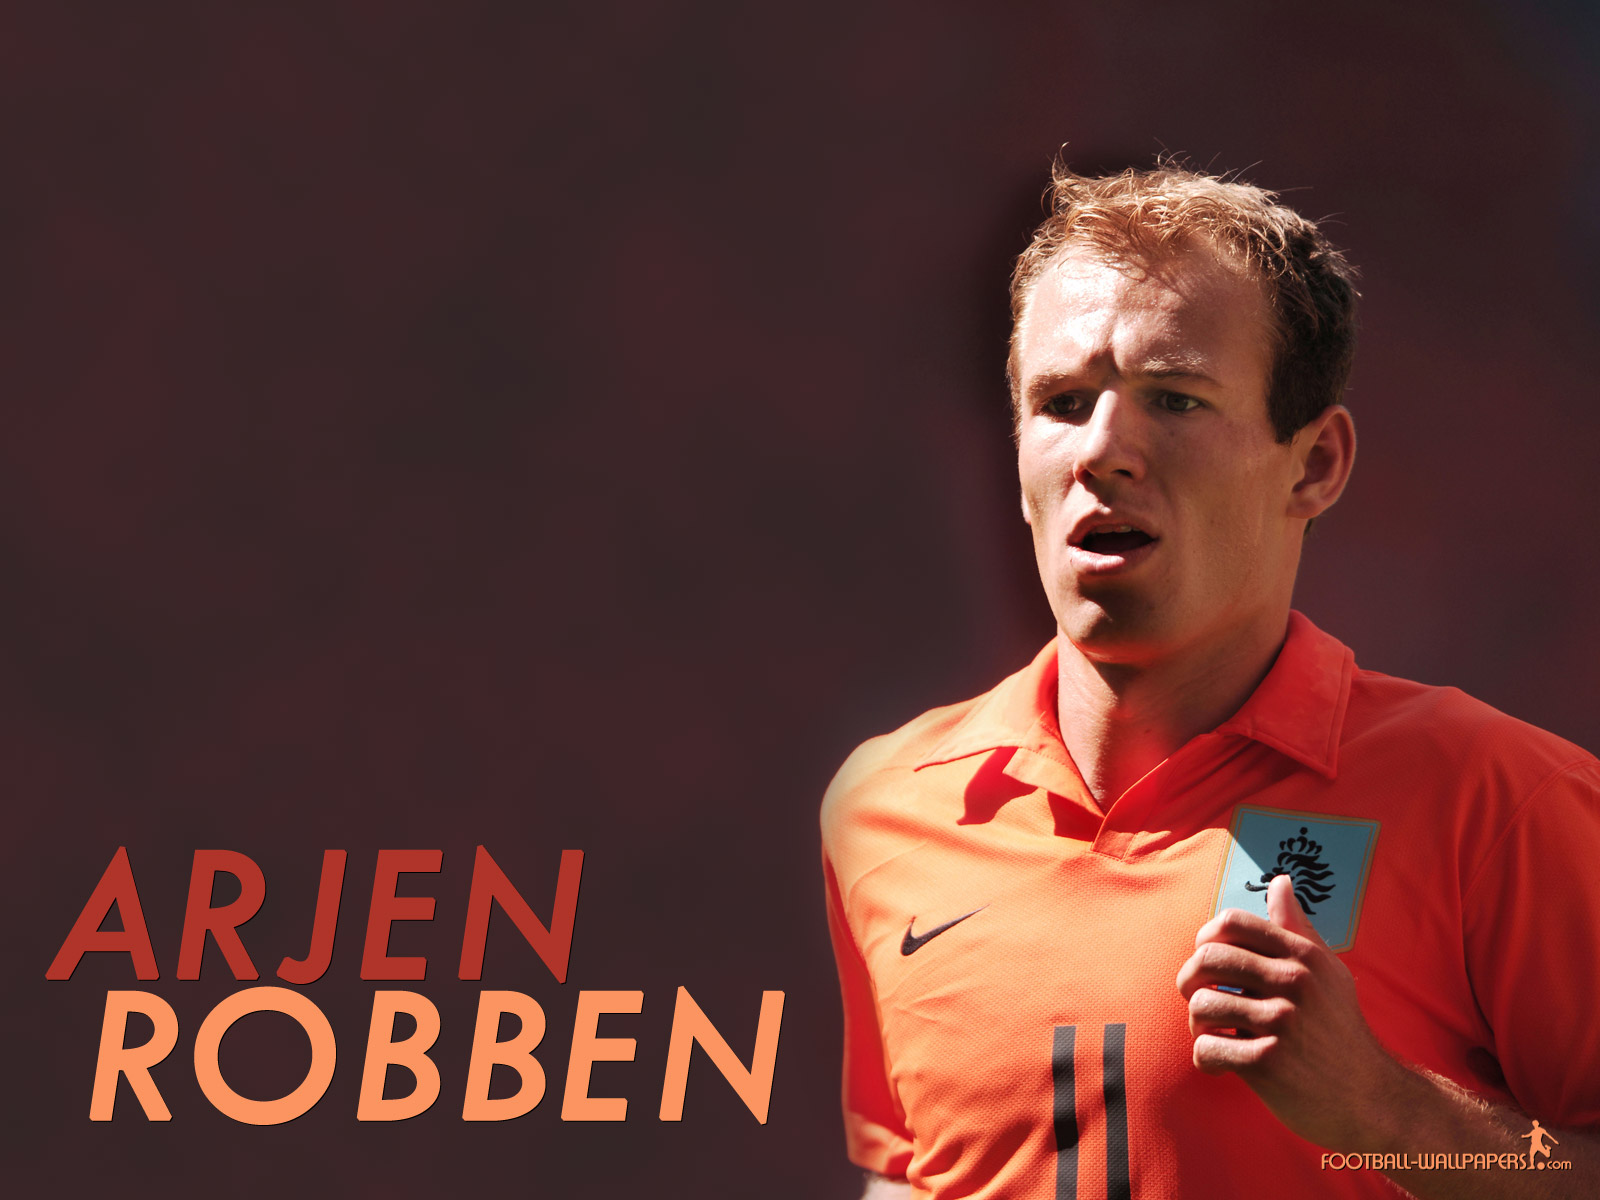 Arjen Robben - Gallery Photo Colection